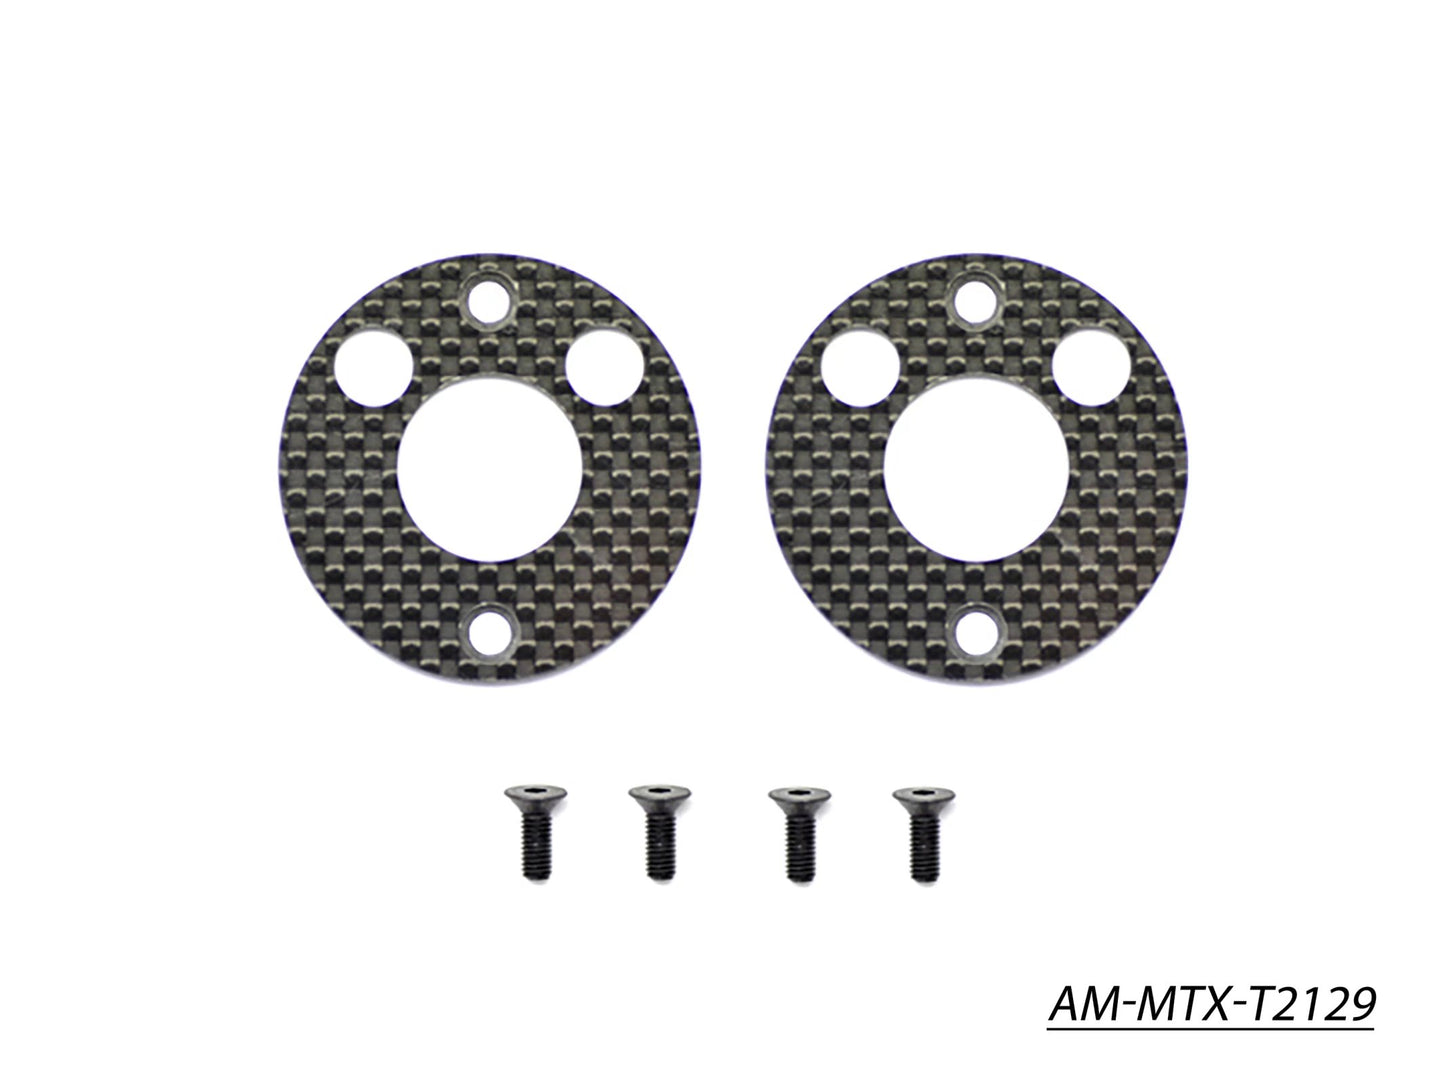 Rear Upright Disc (2) (AM-MTX-T2129)